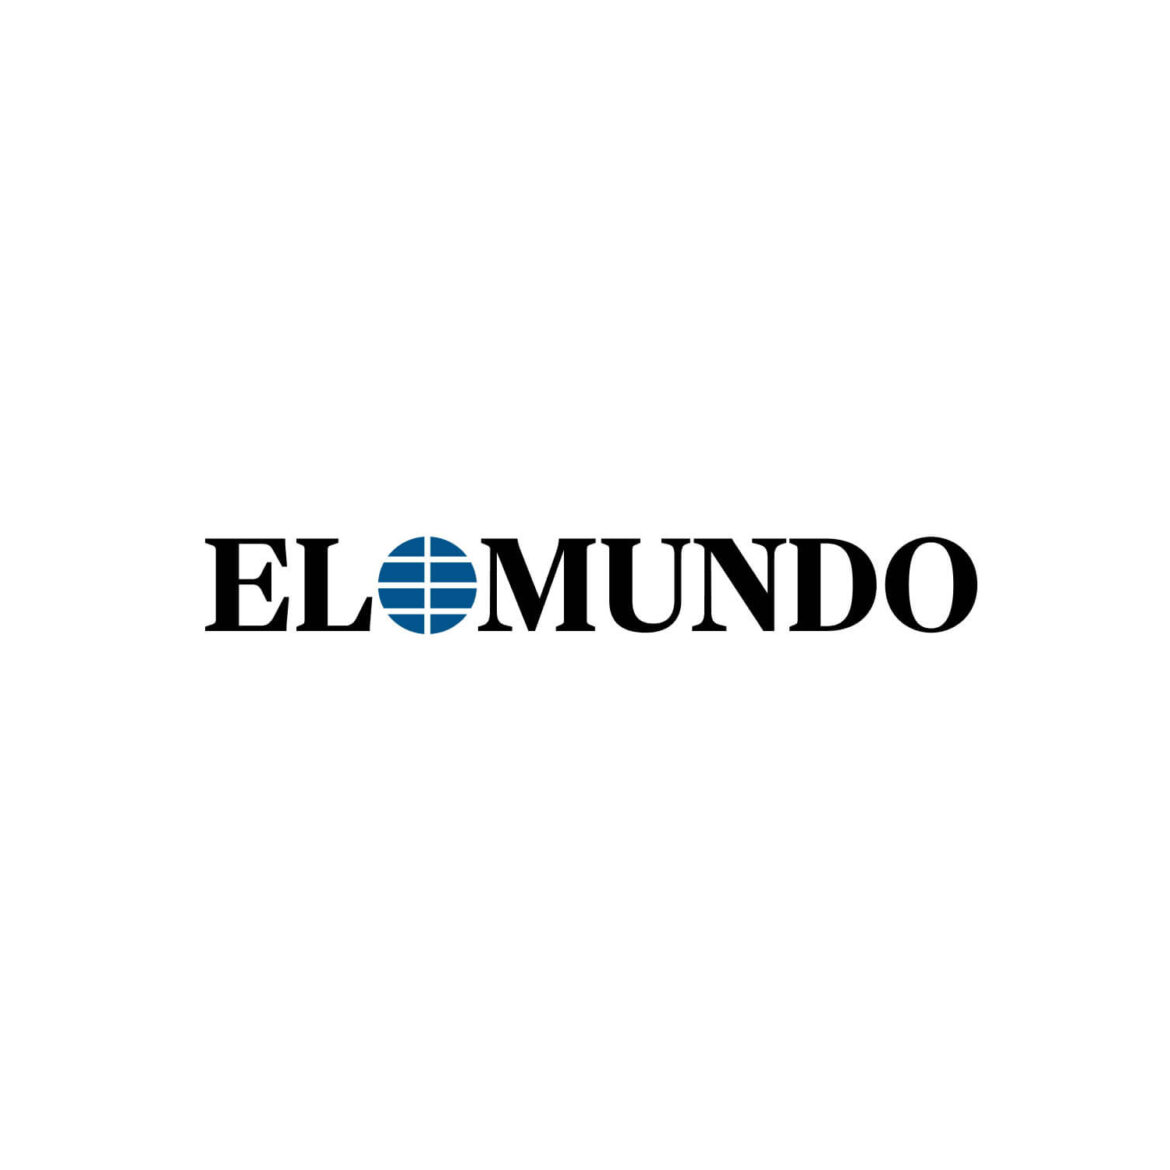 elmundo__logo-generica.jpg